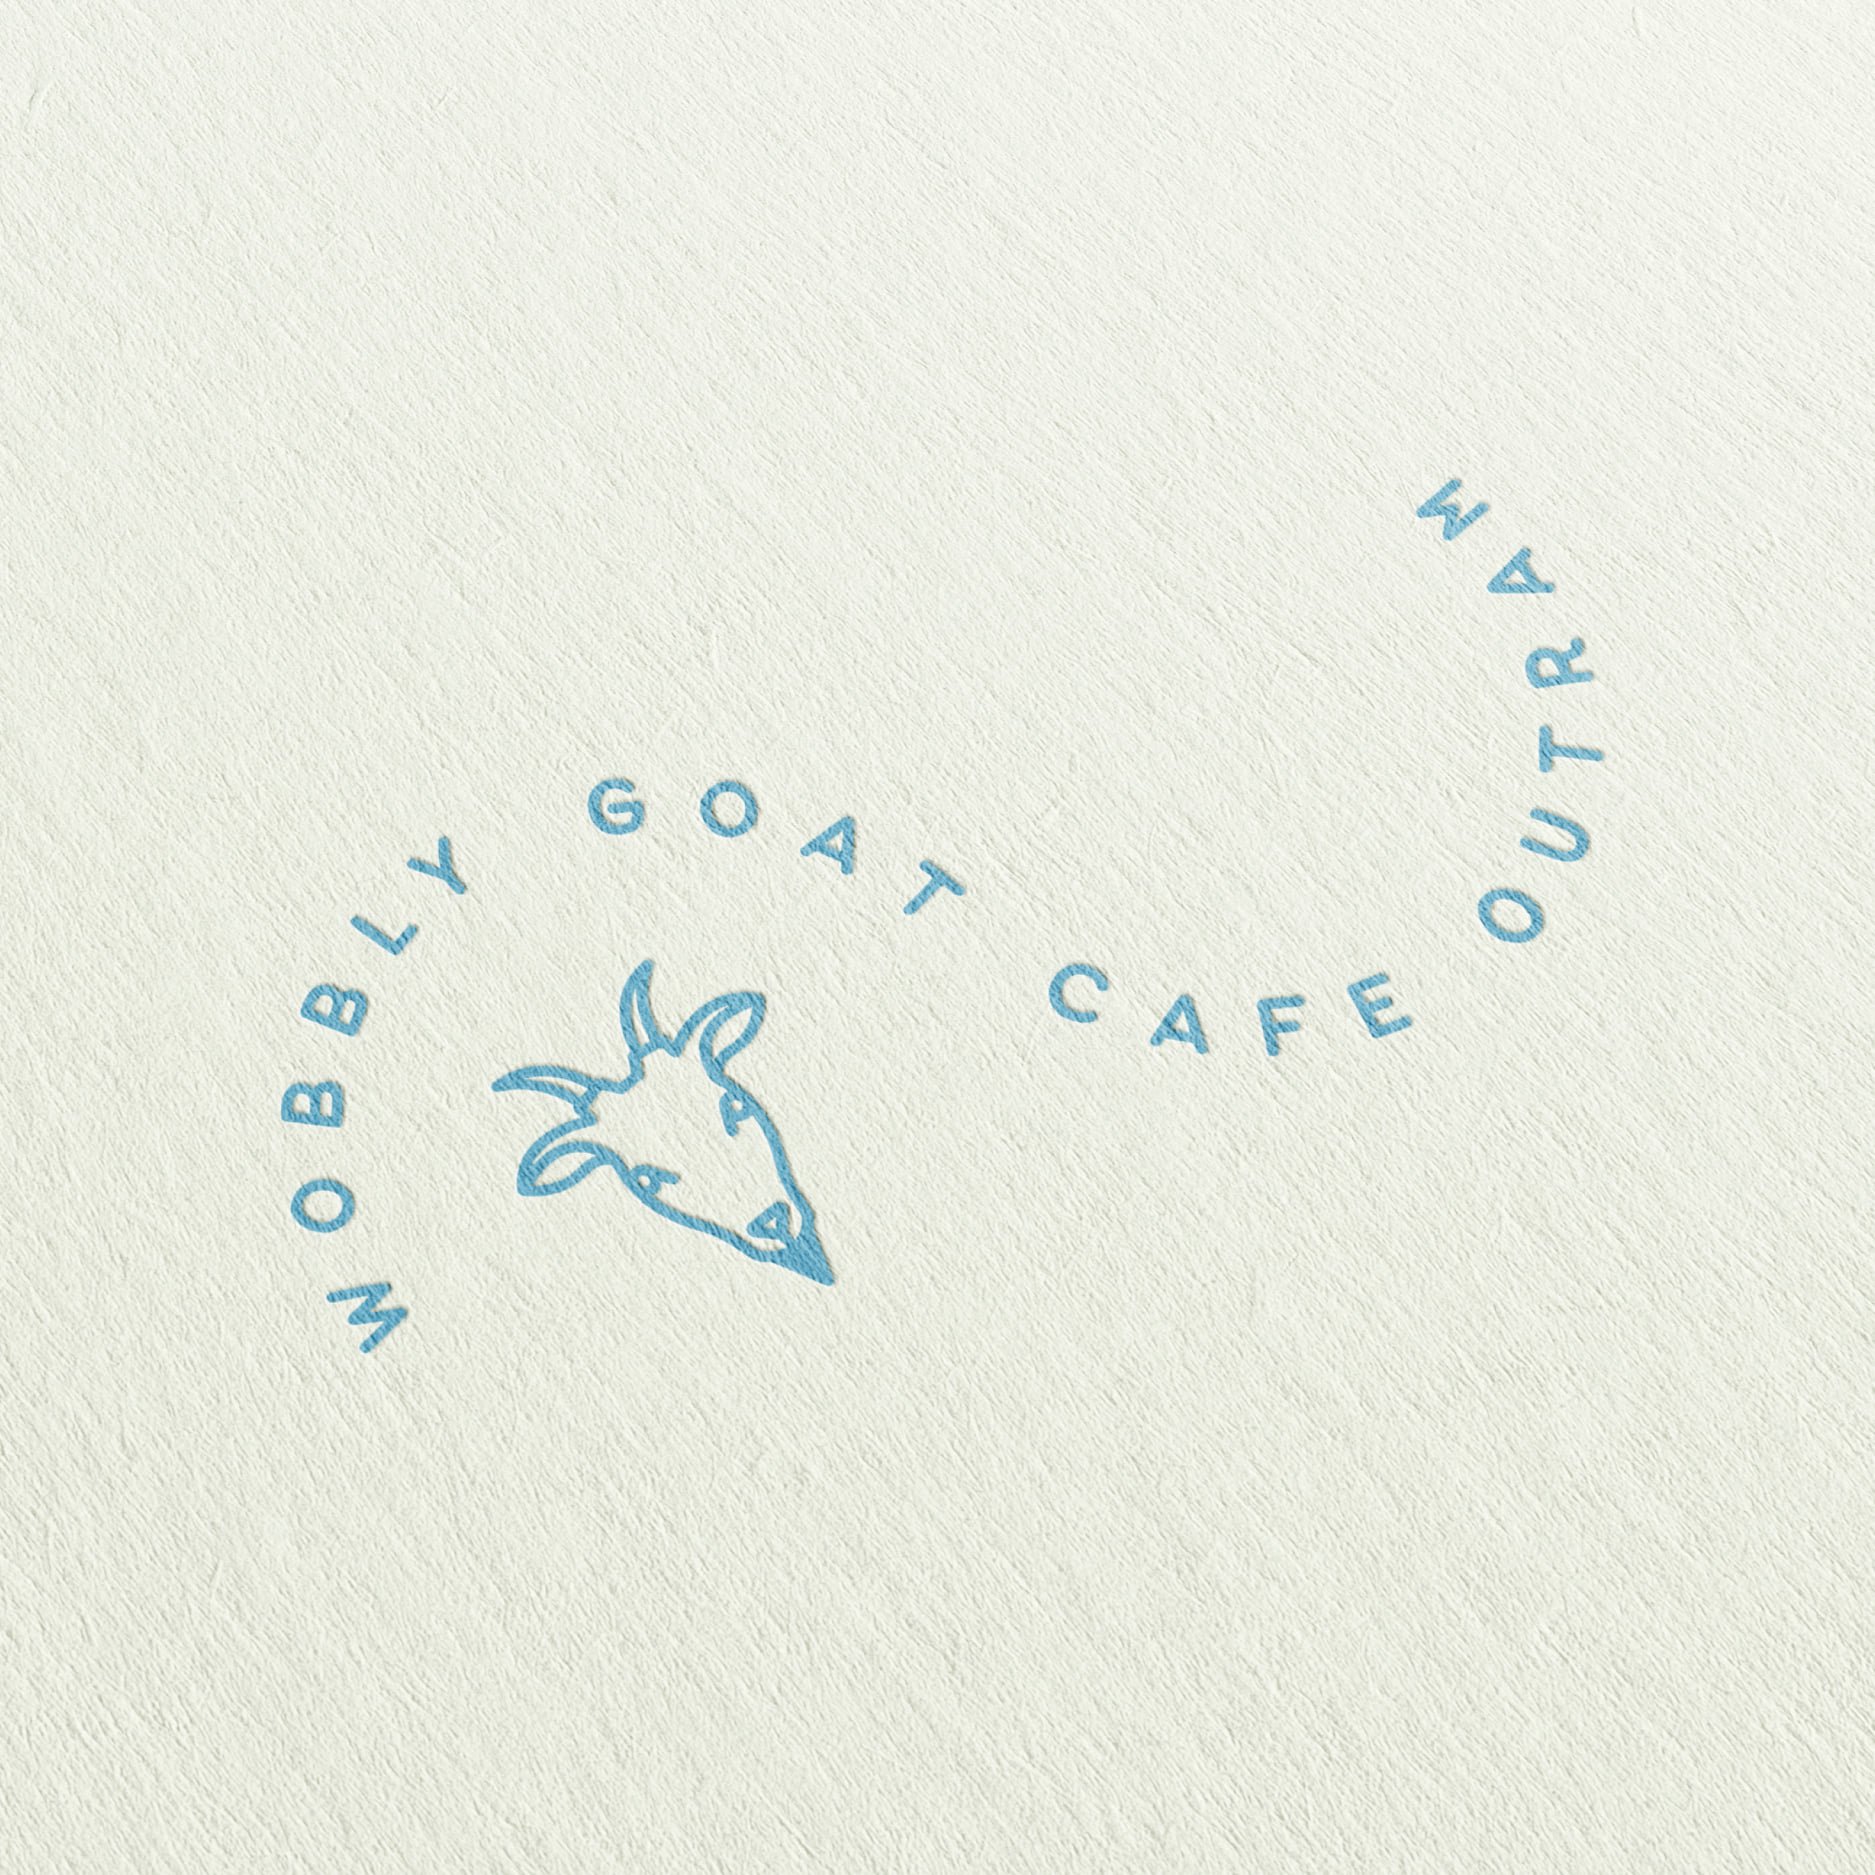 Wobbly Goat Café